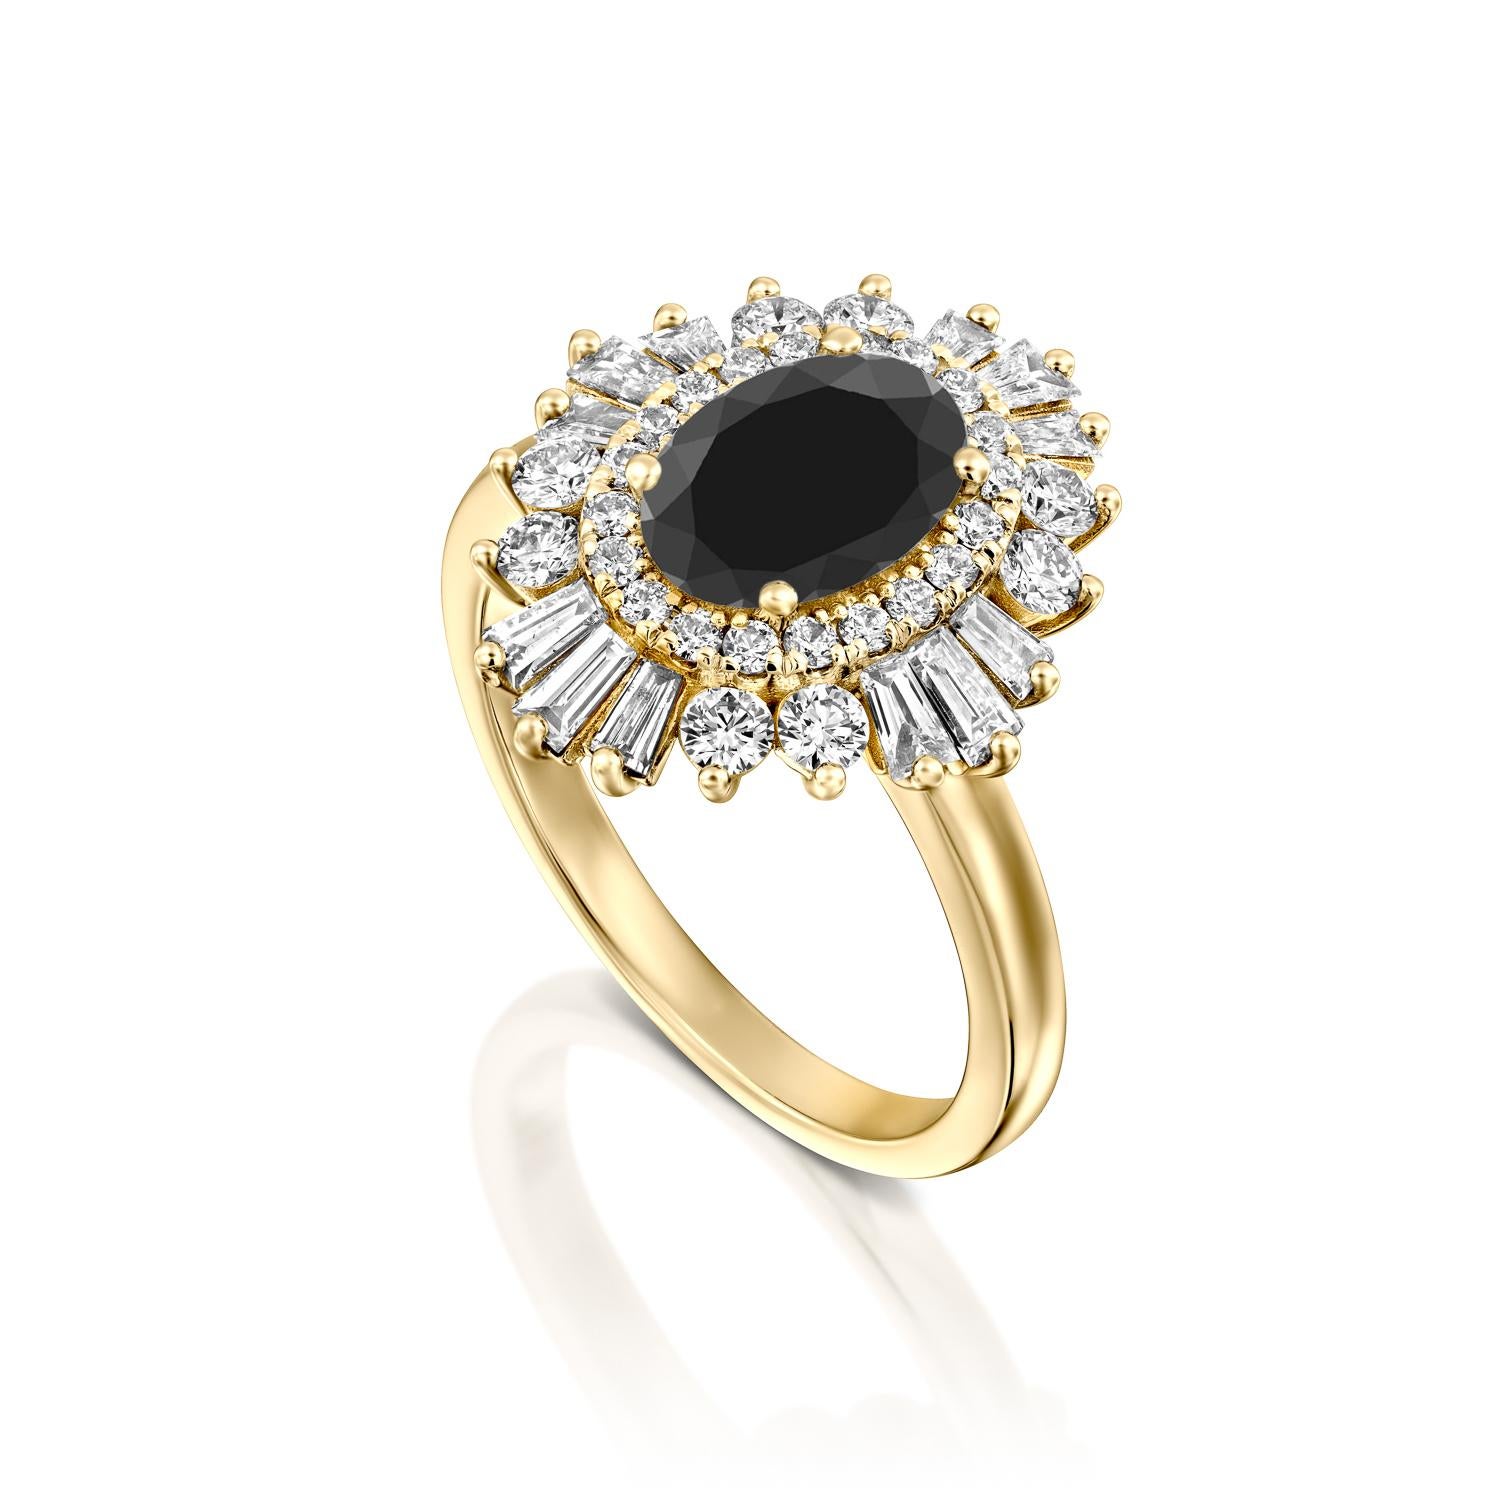 3 ct black diamond engagement rings